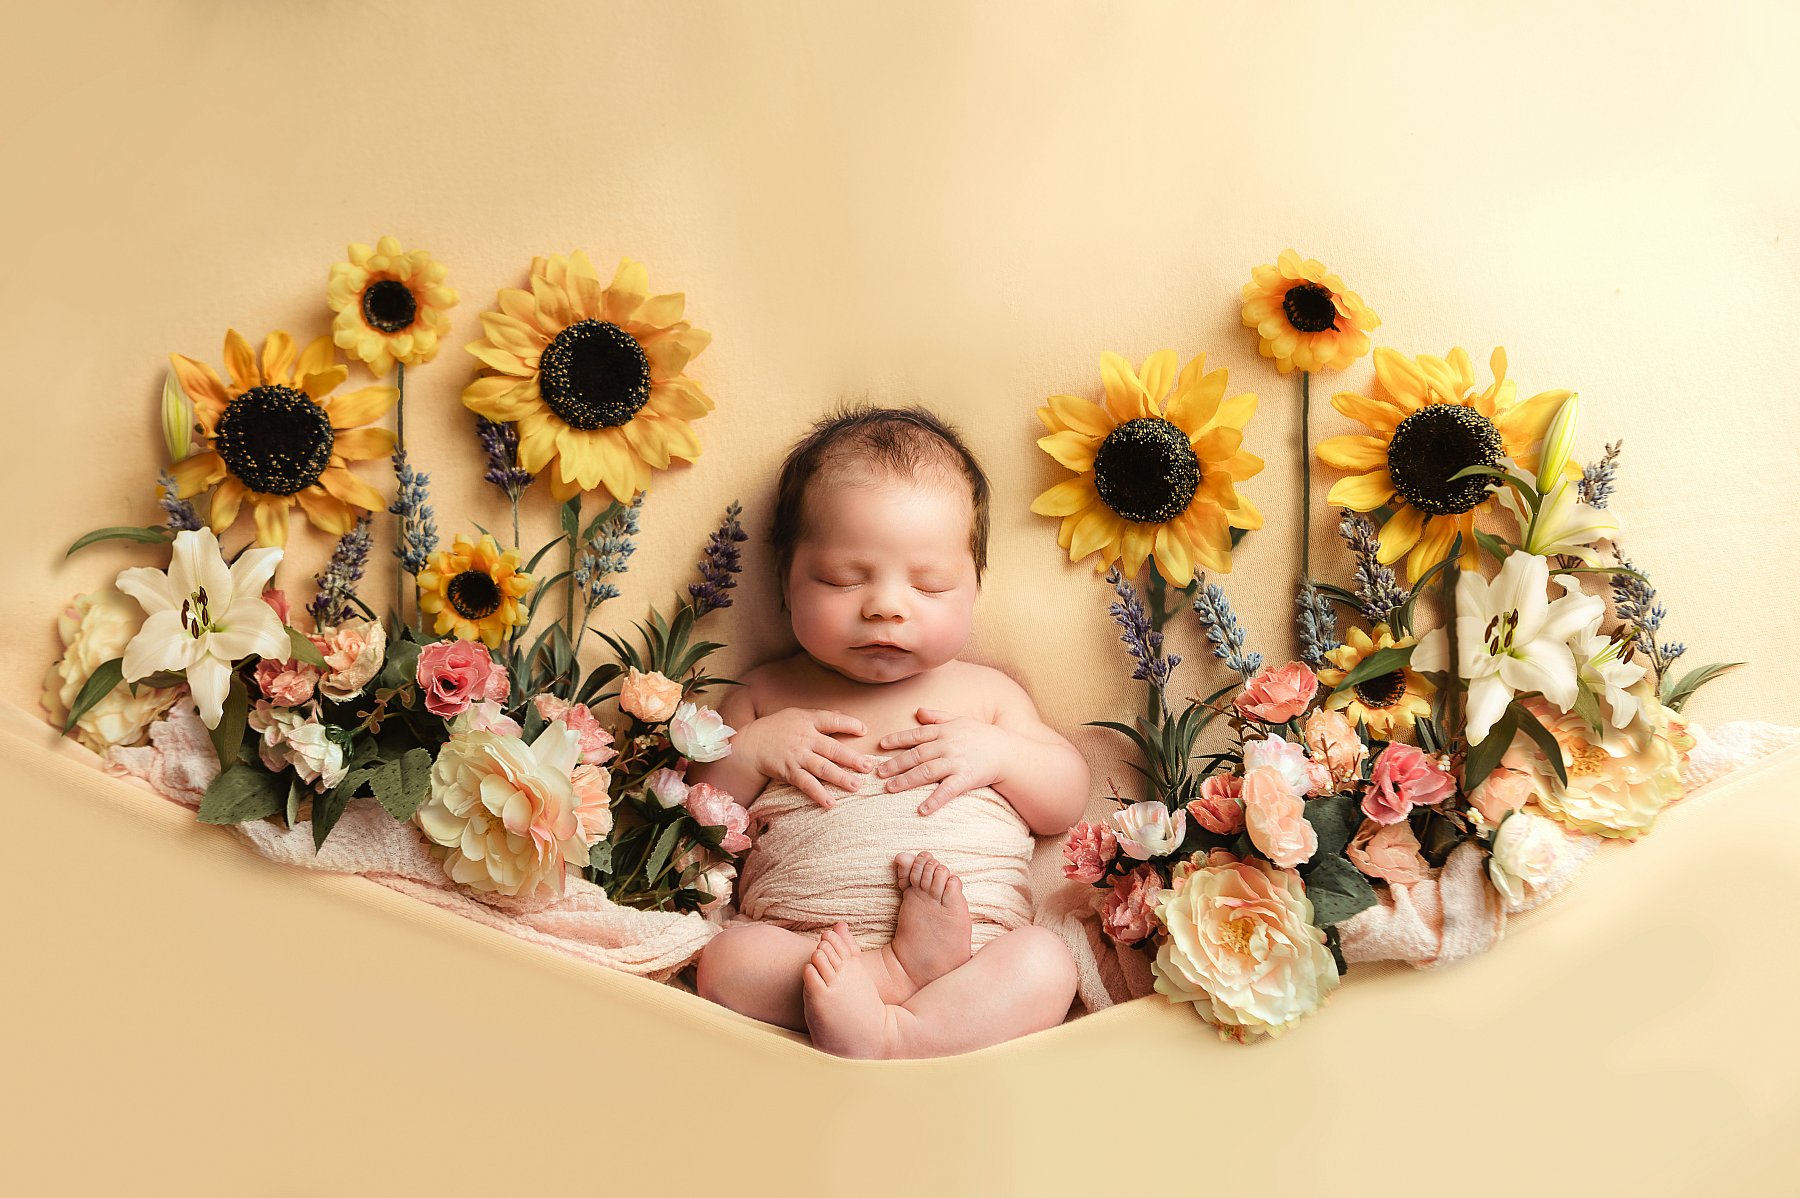 Dolci Momenti Photography, Pennsylvania award winning newborn